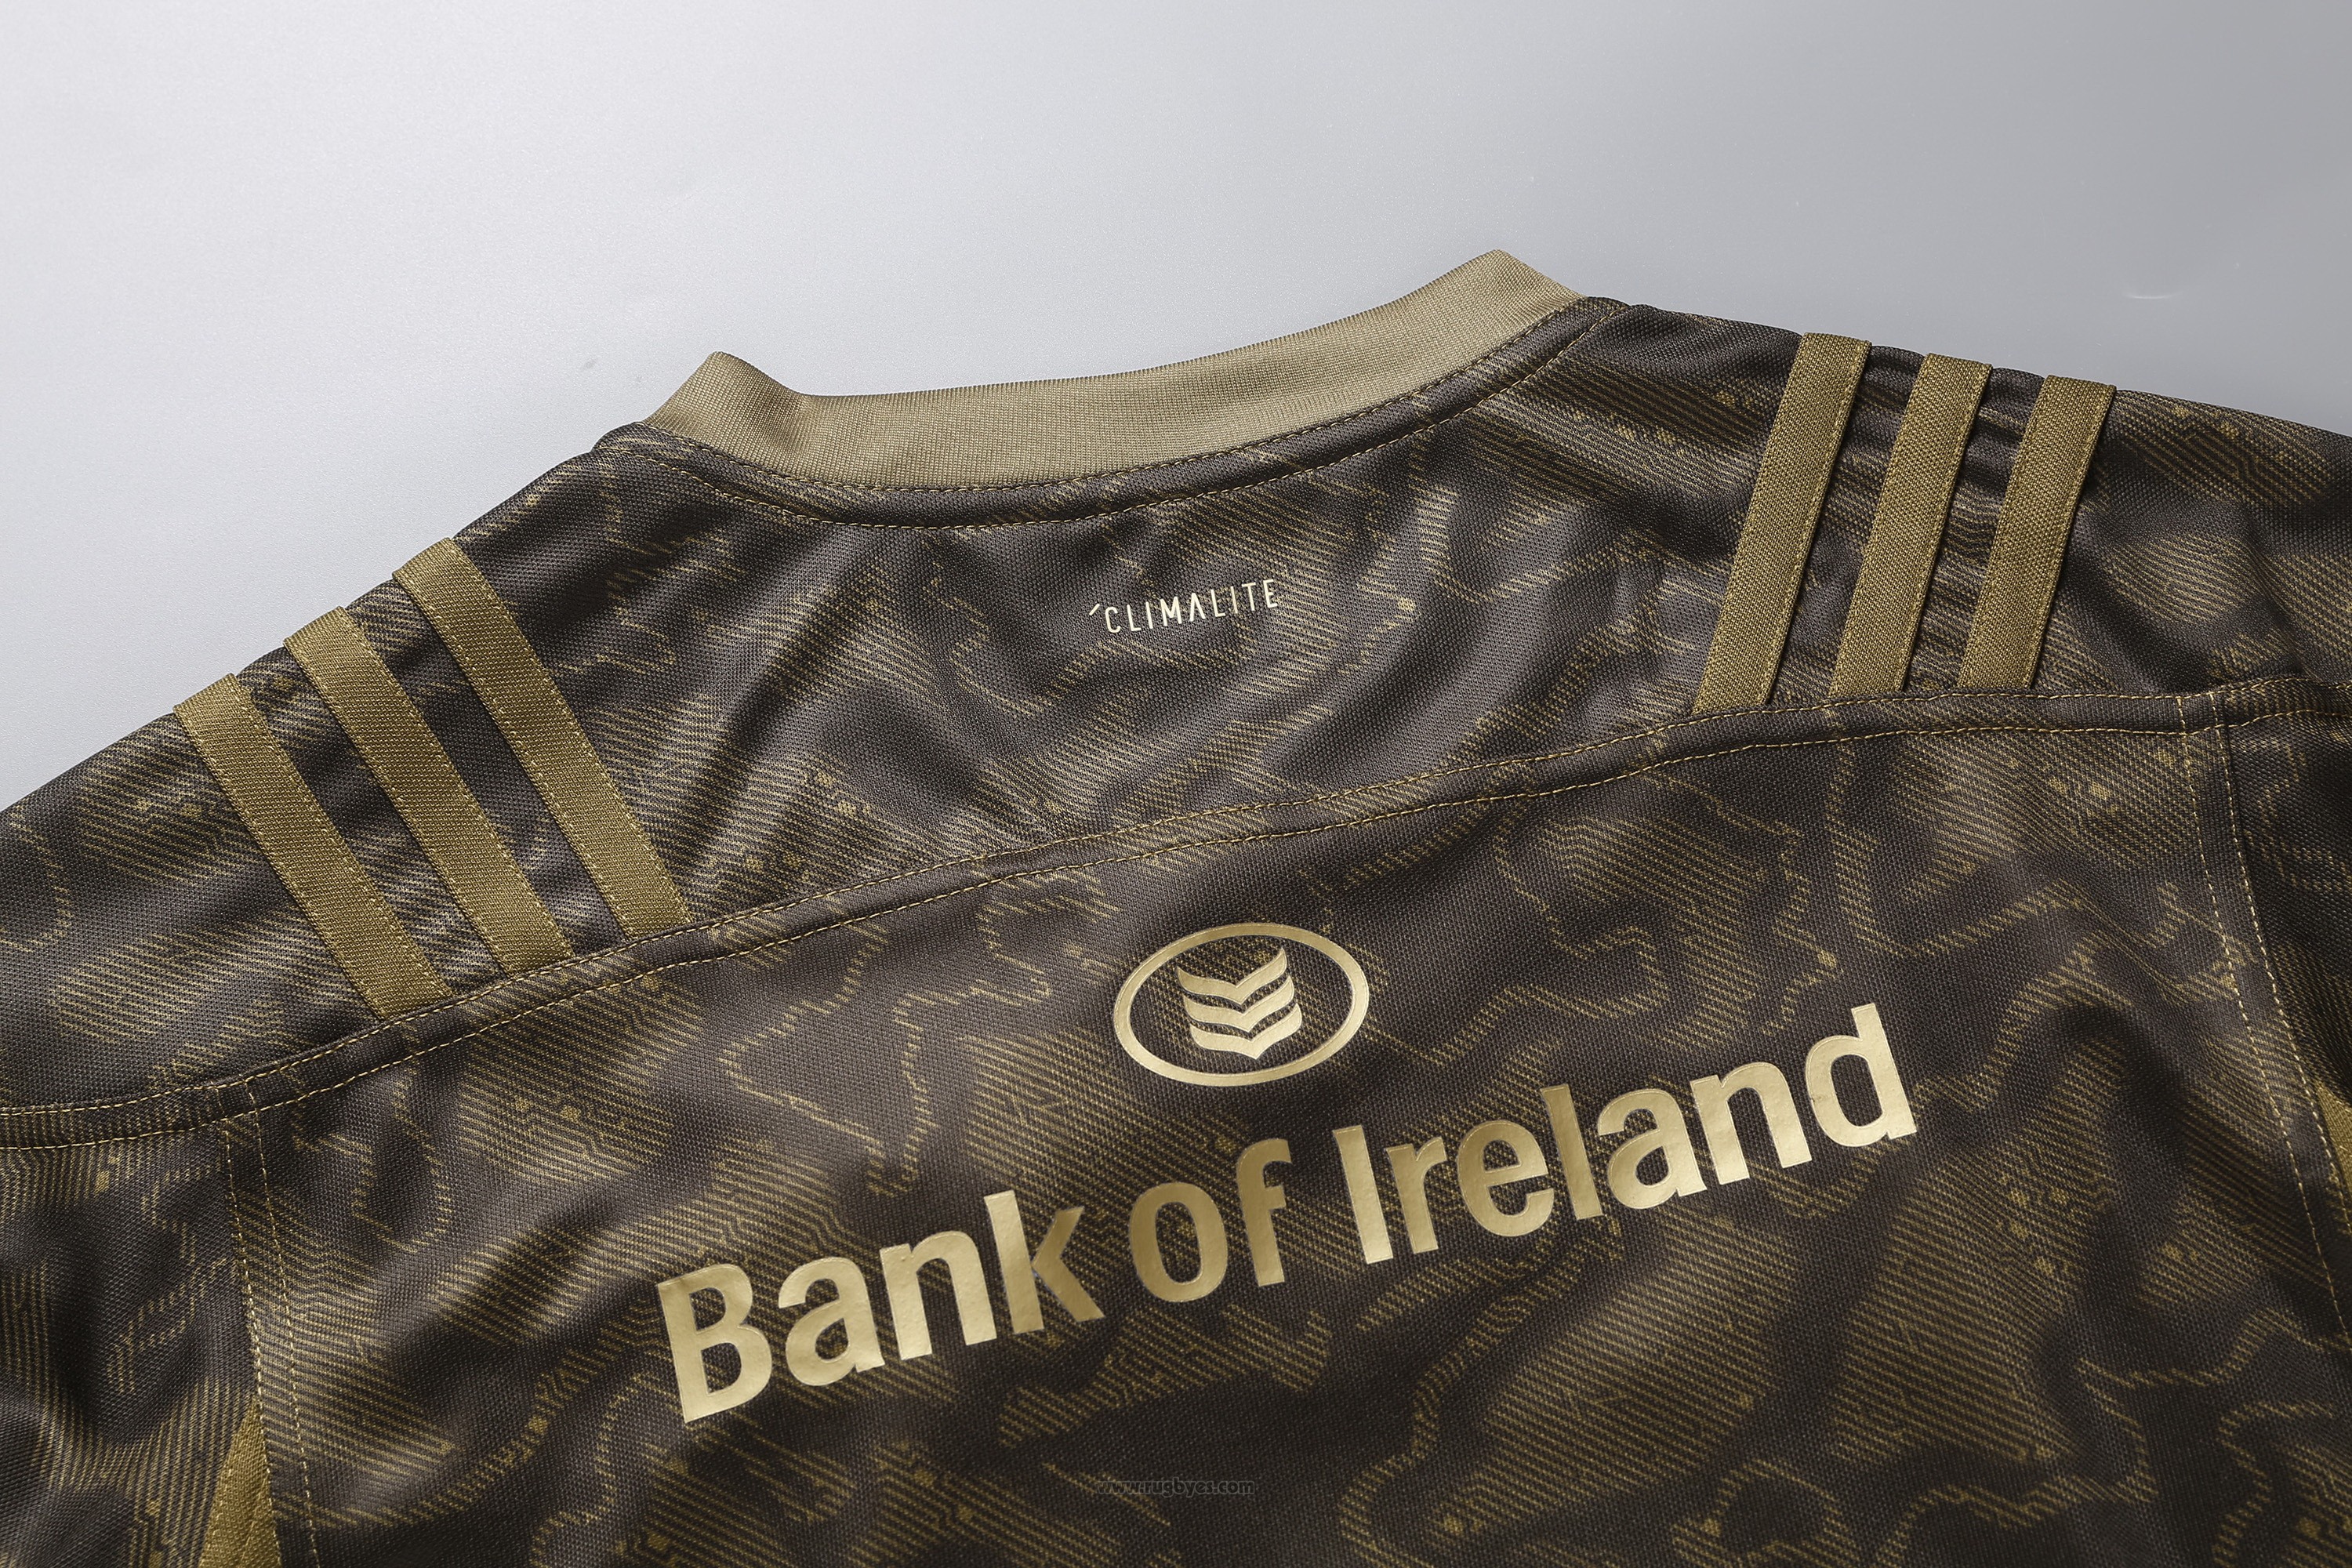 Camiseta Leinster Rugby 2018-2019 Segunda